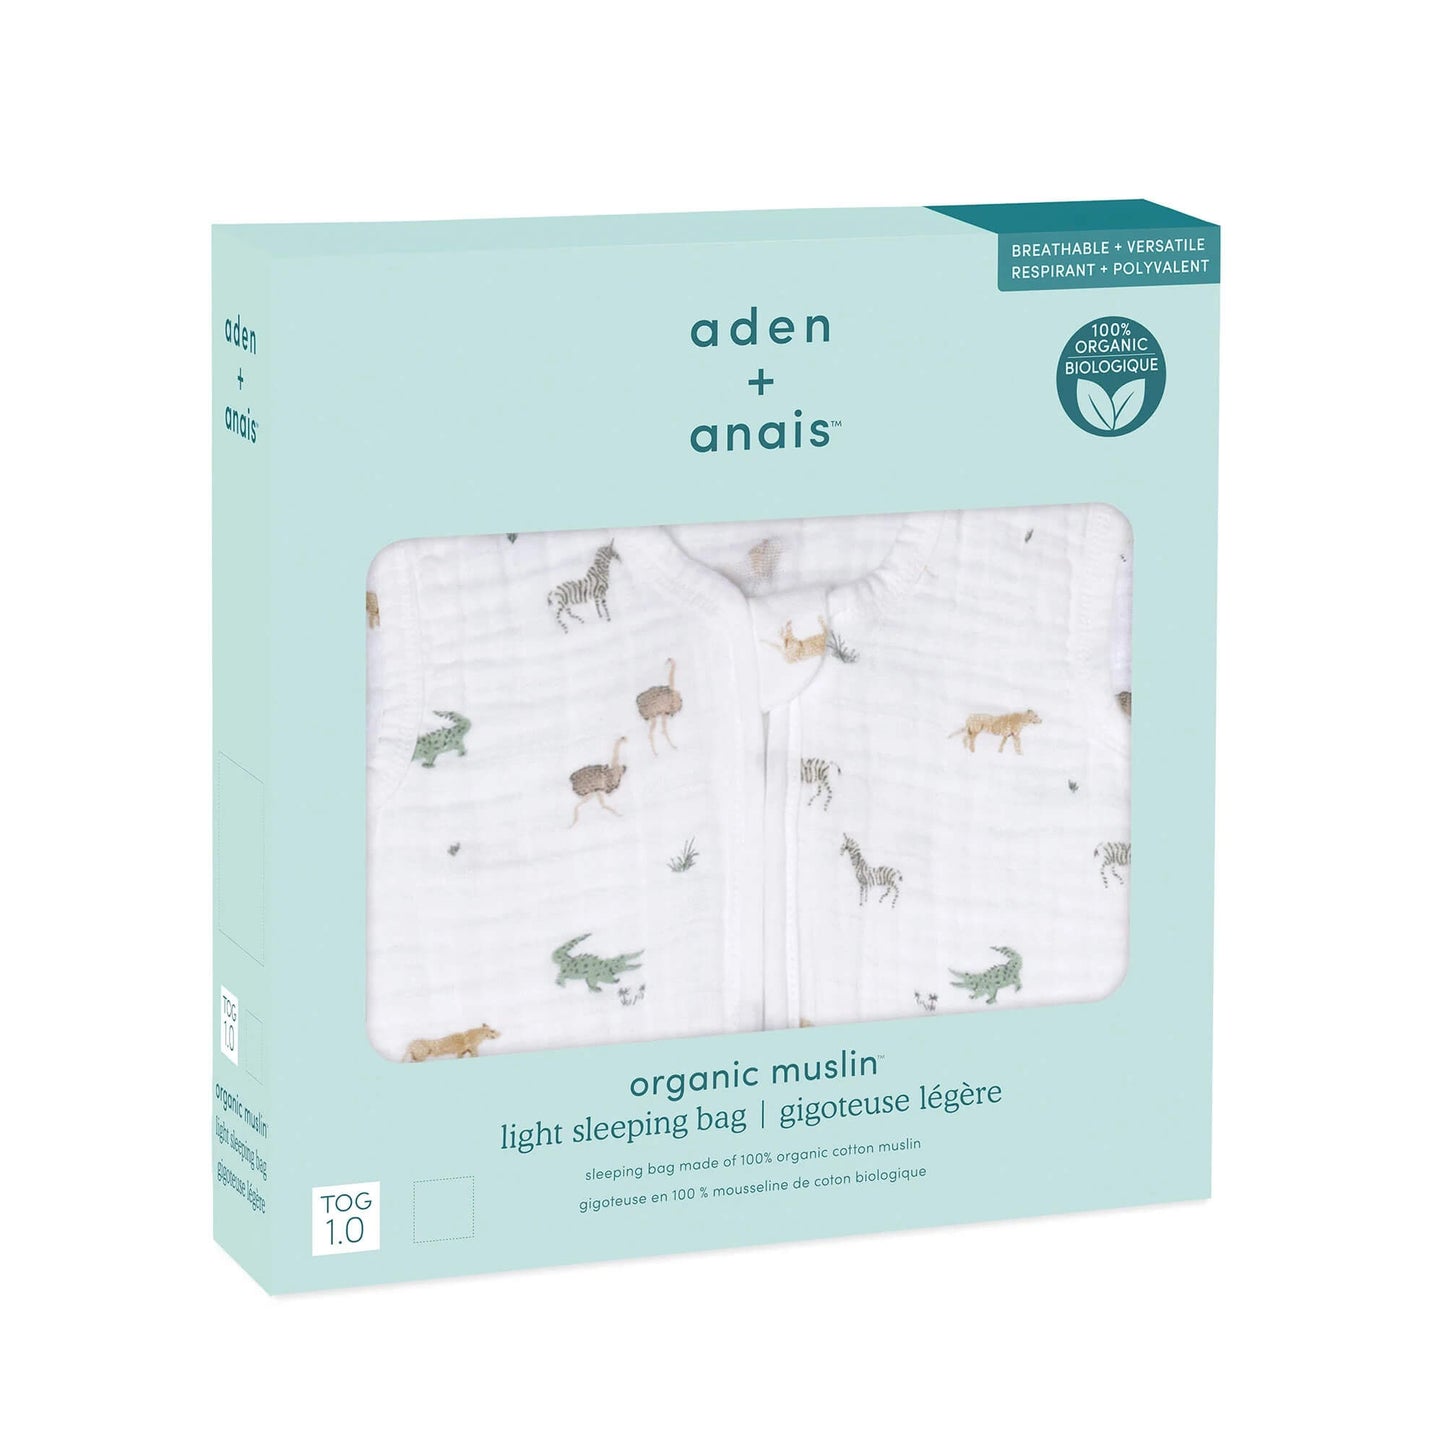 aden + anais Organic Cotton Light Sleeping Bag - 1.0 Tog (Safari Dreams)